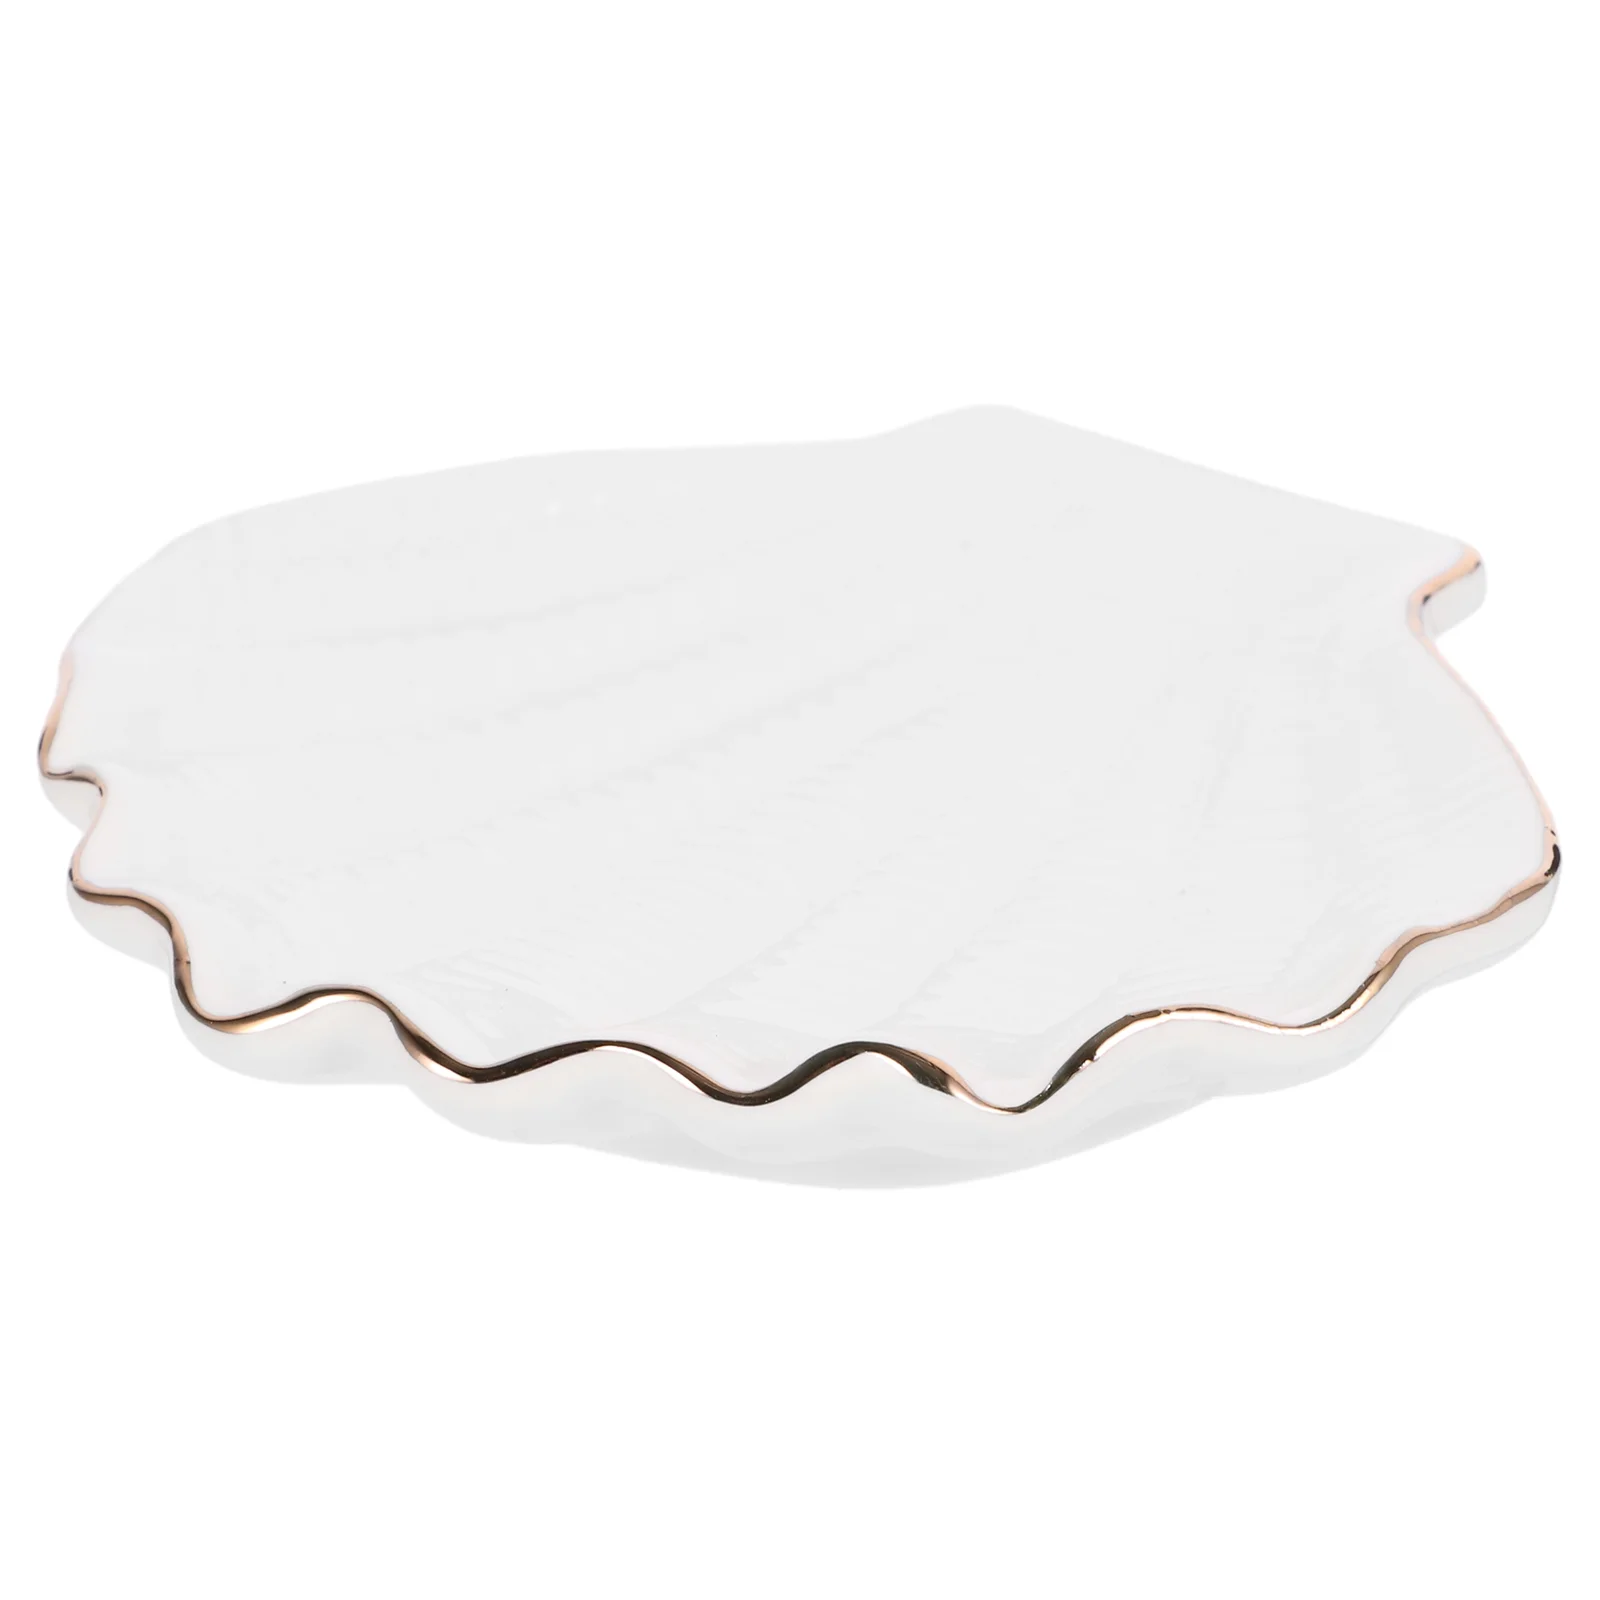 

Vanity Desk Shell Decorative Jewelry Tray Plate Accessories Organizer Key Tray Trinket Dish Bracket Storage Ceramic Holder